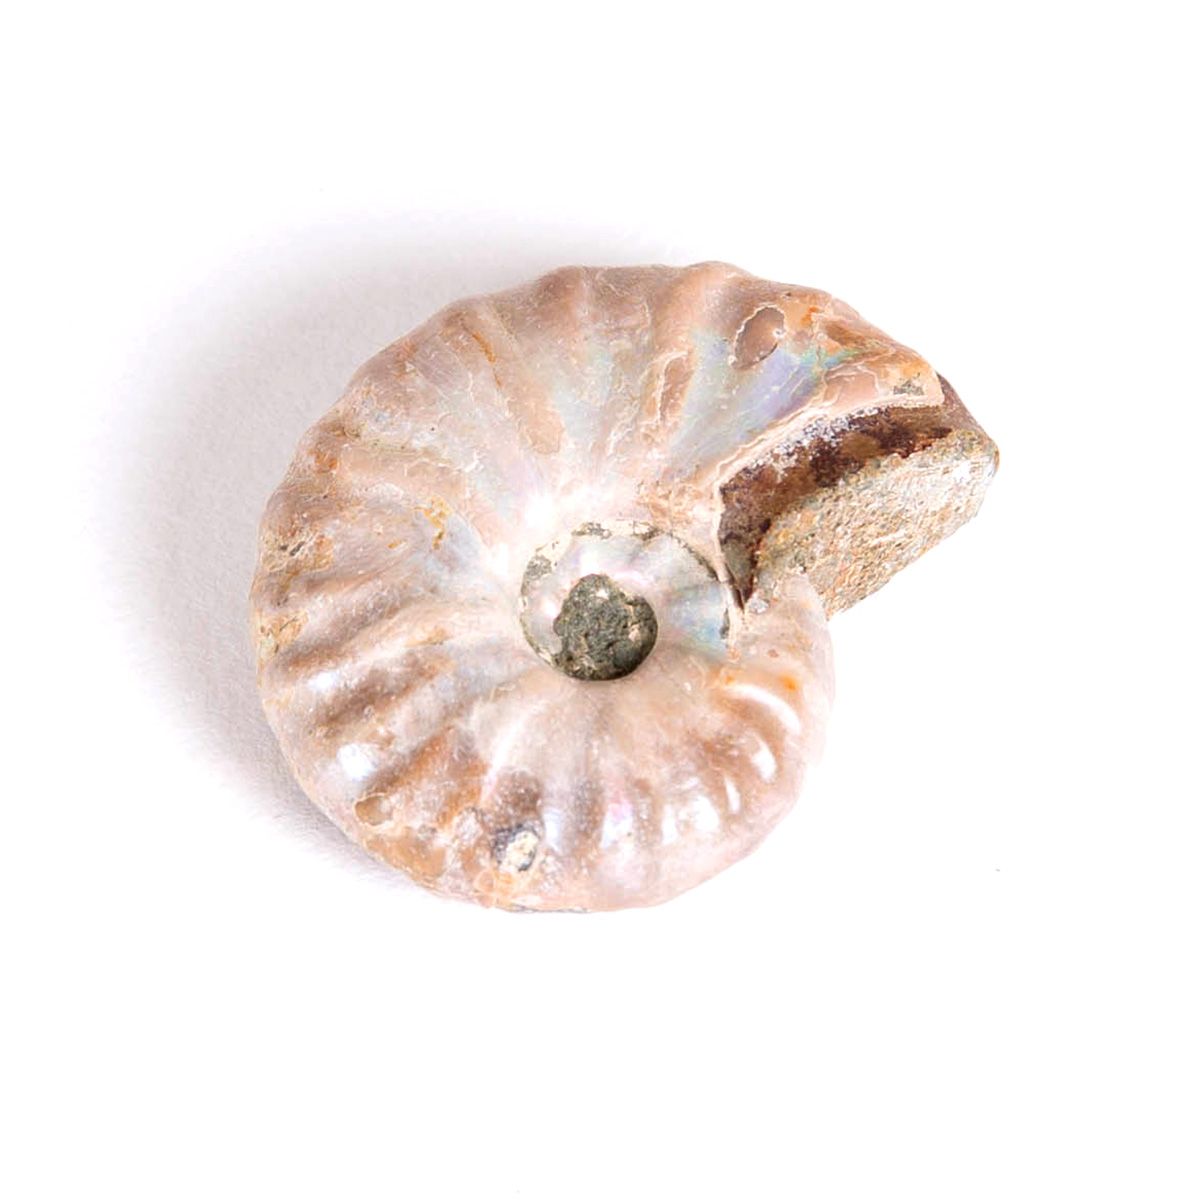 Ammonite Polished Fossil in Box Frame (Cleoniceras sp) - Specimen #01